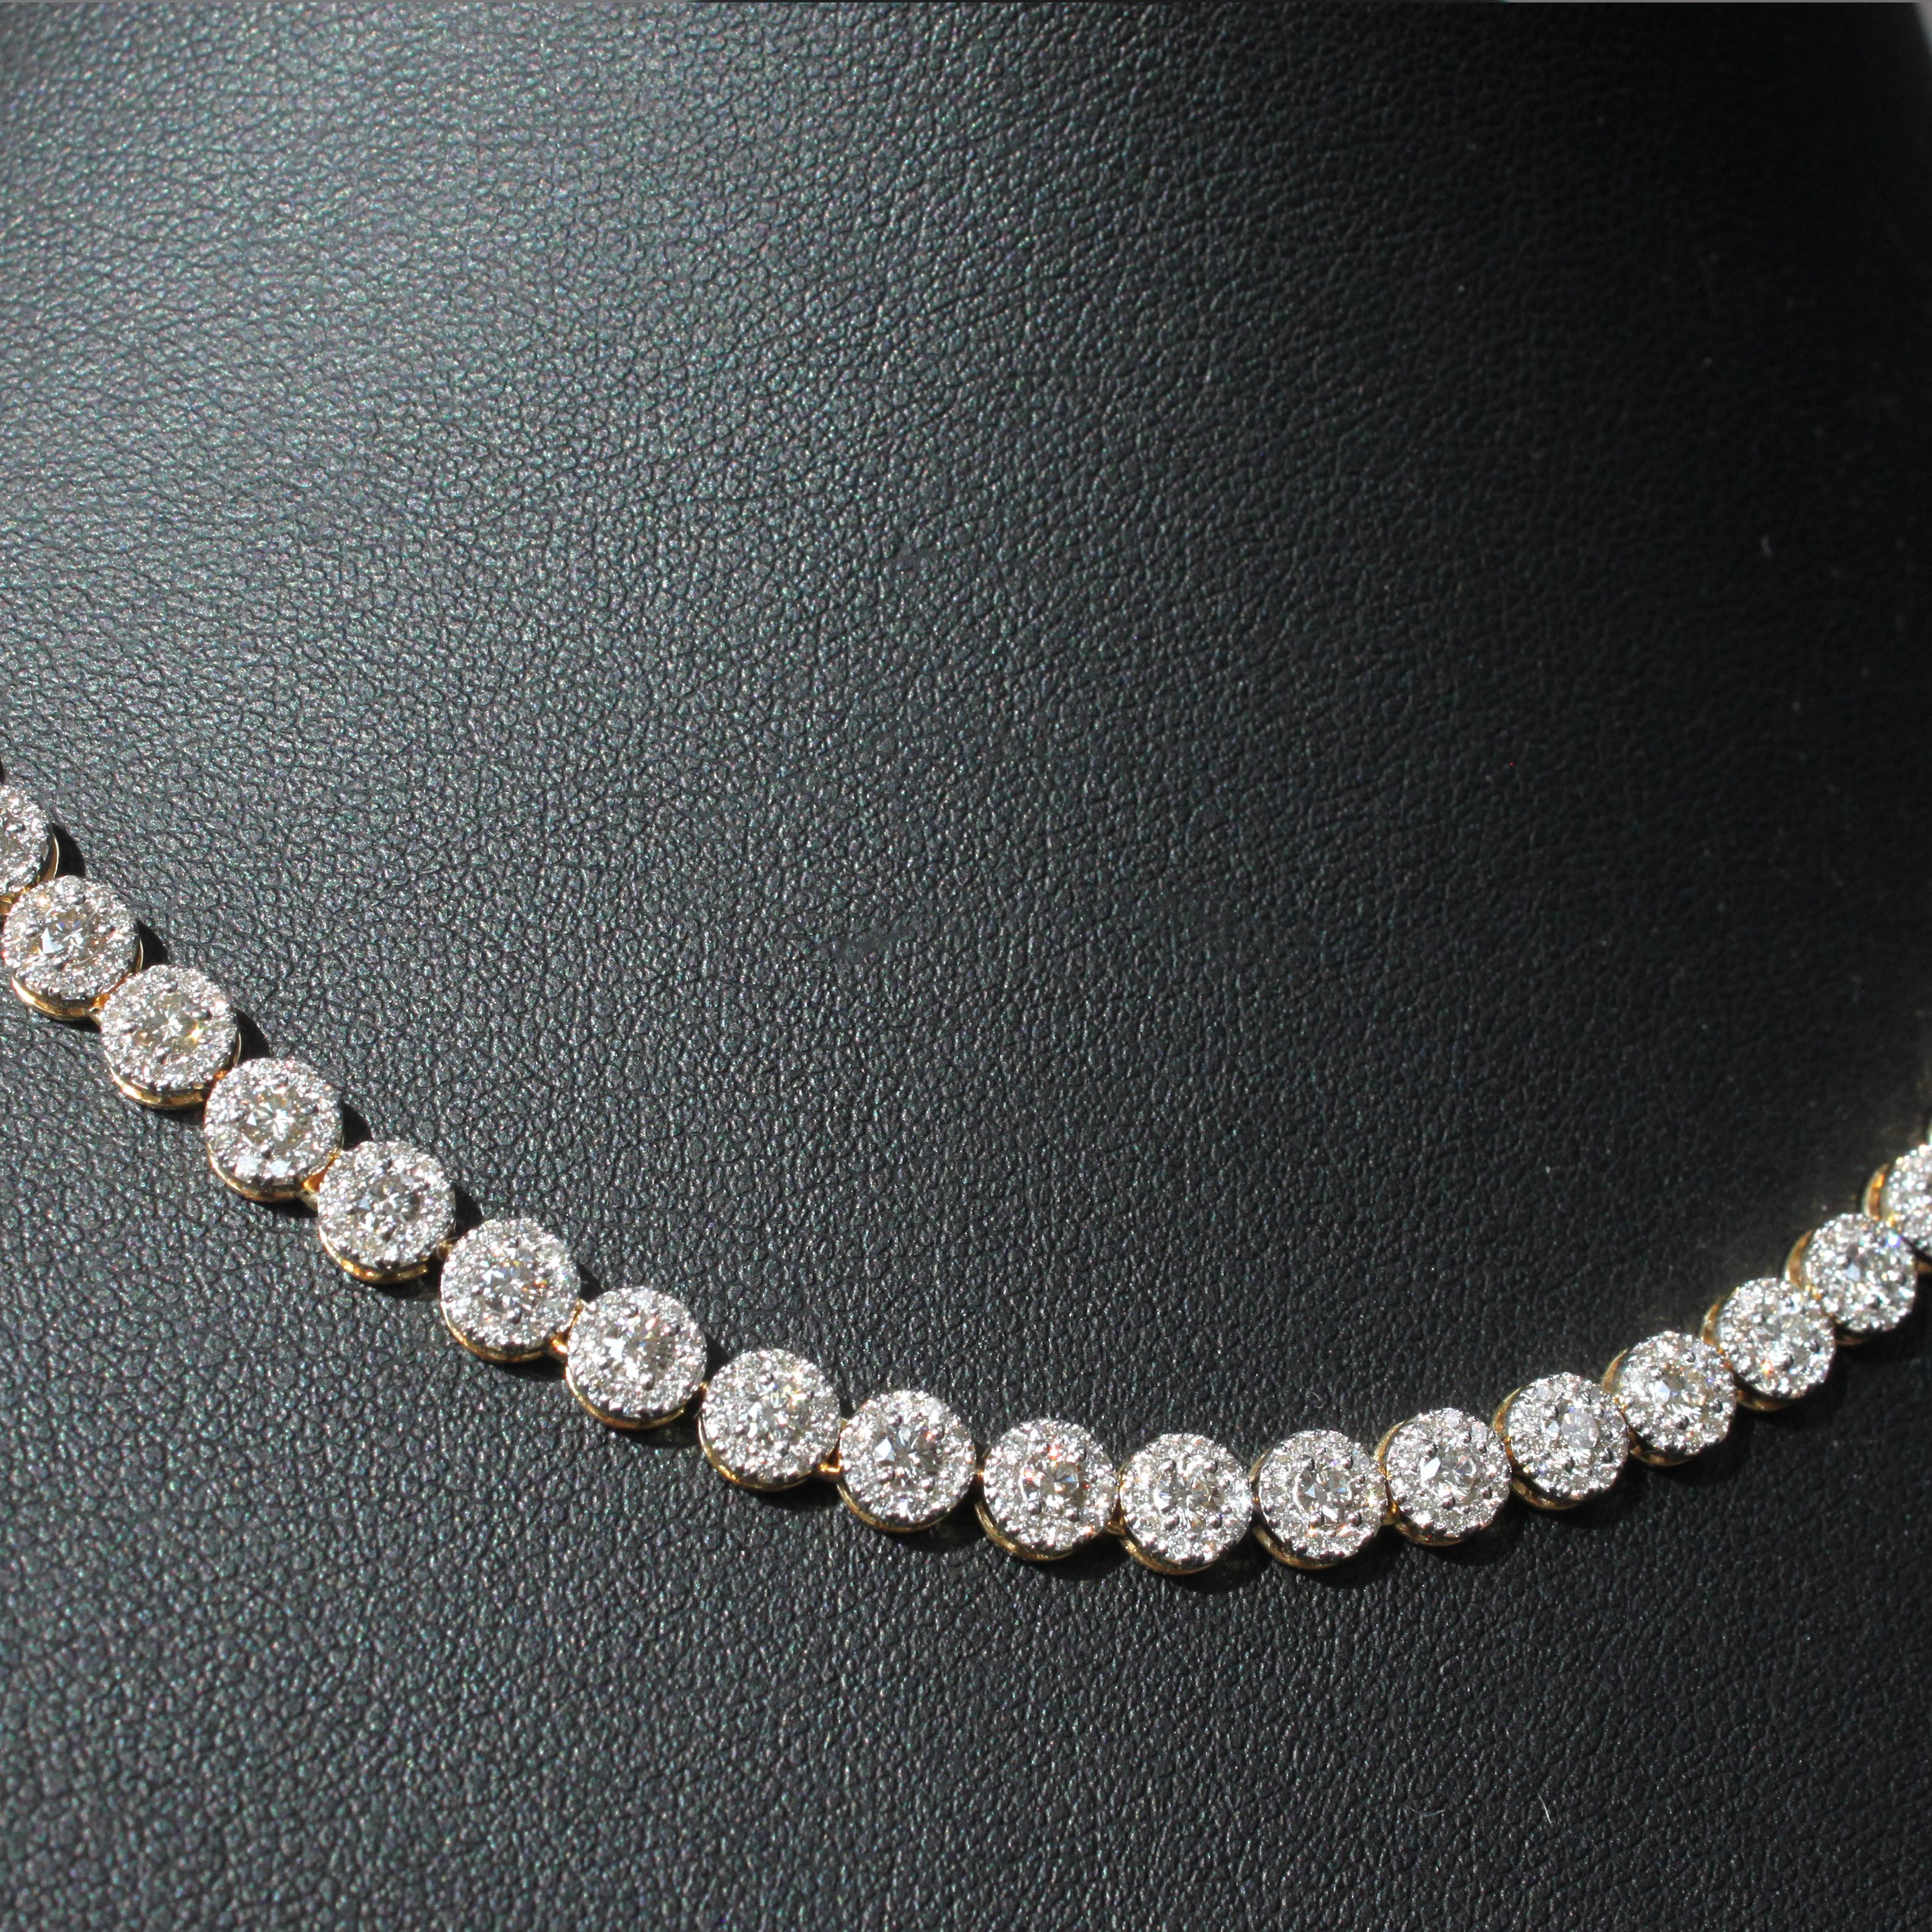 Brilliant Cut Unique Tennis Cluster Diamond Necklace in 14K Gold For Sale